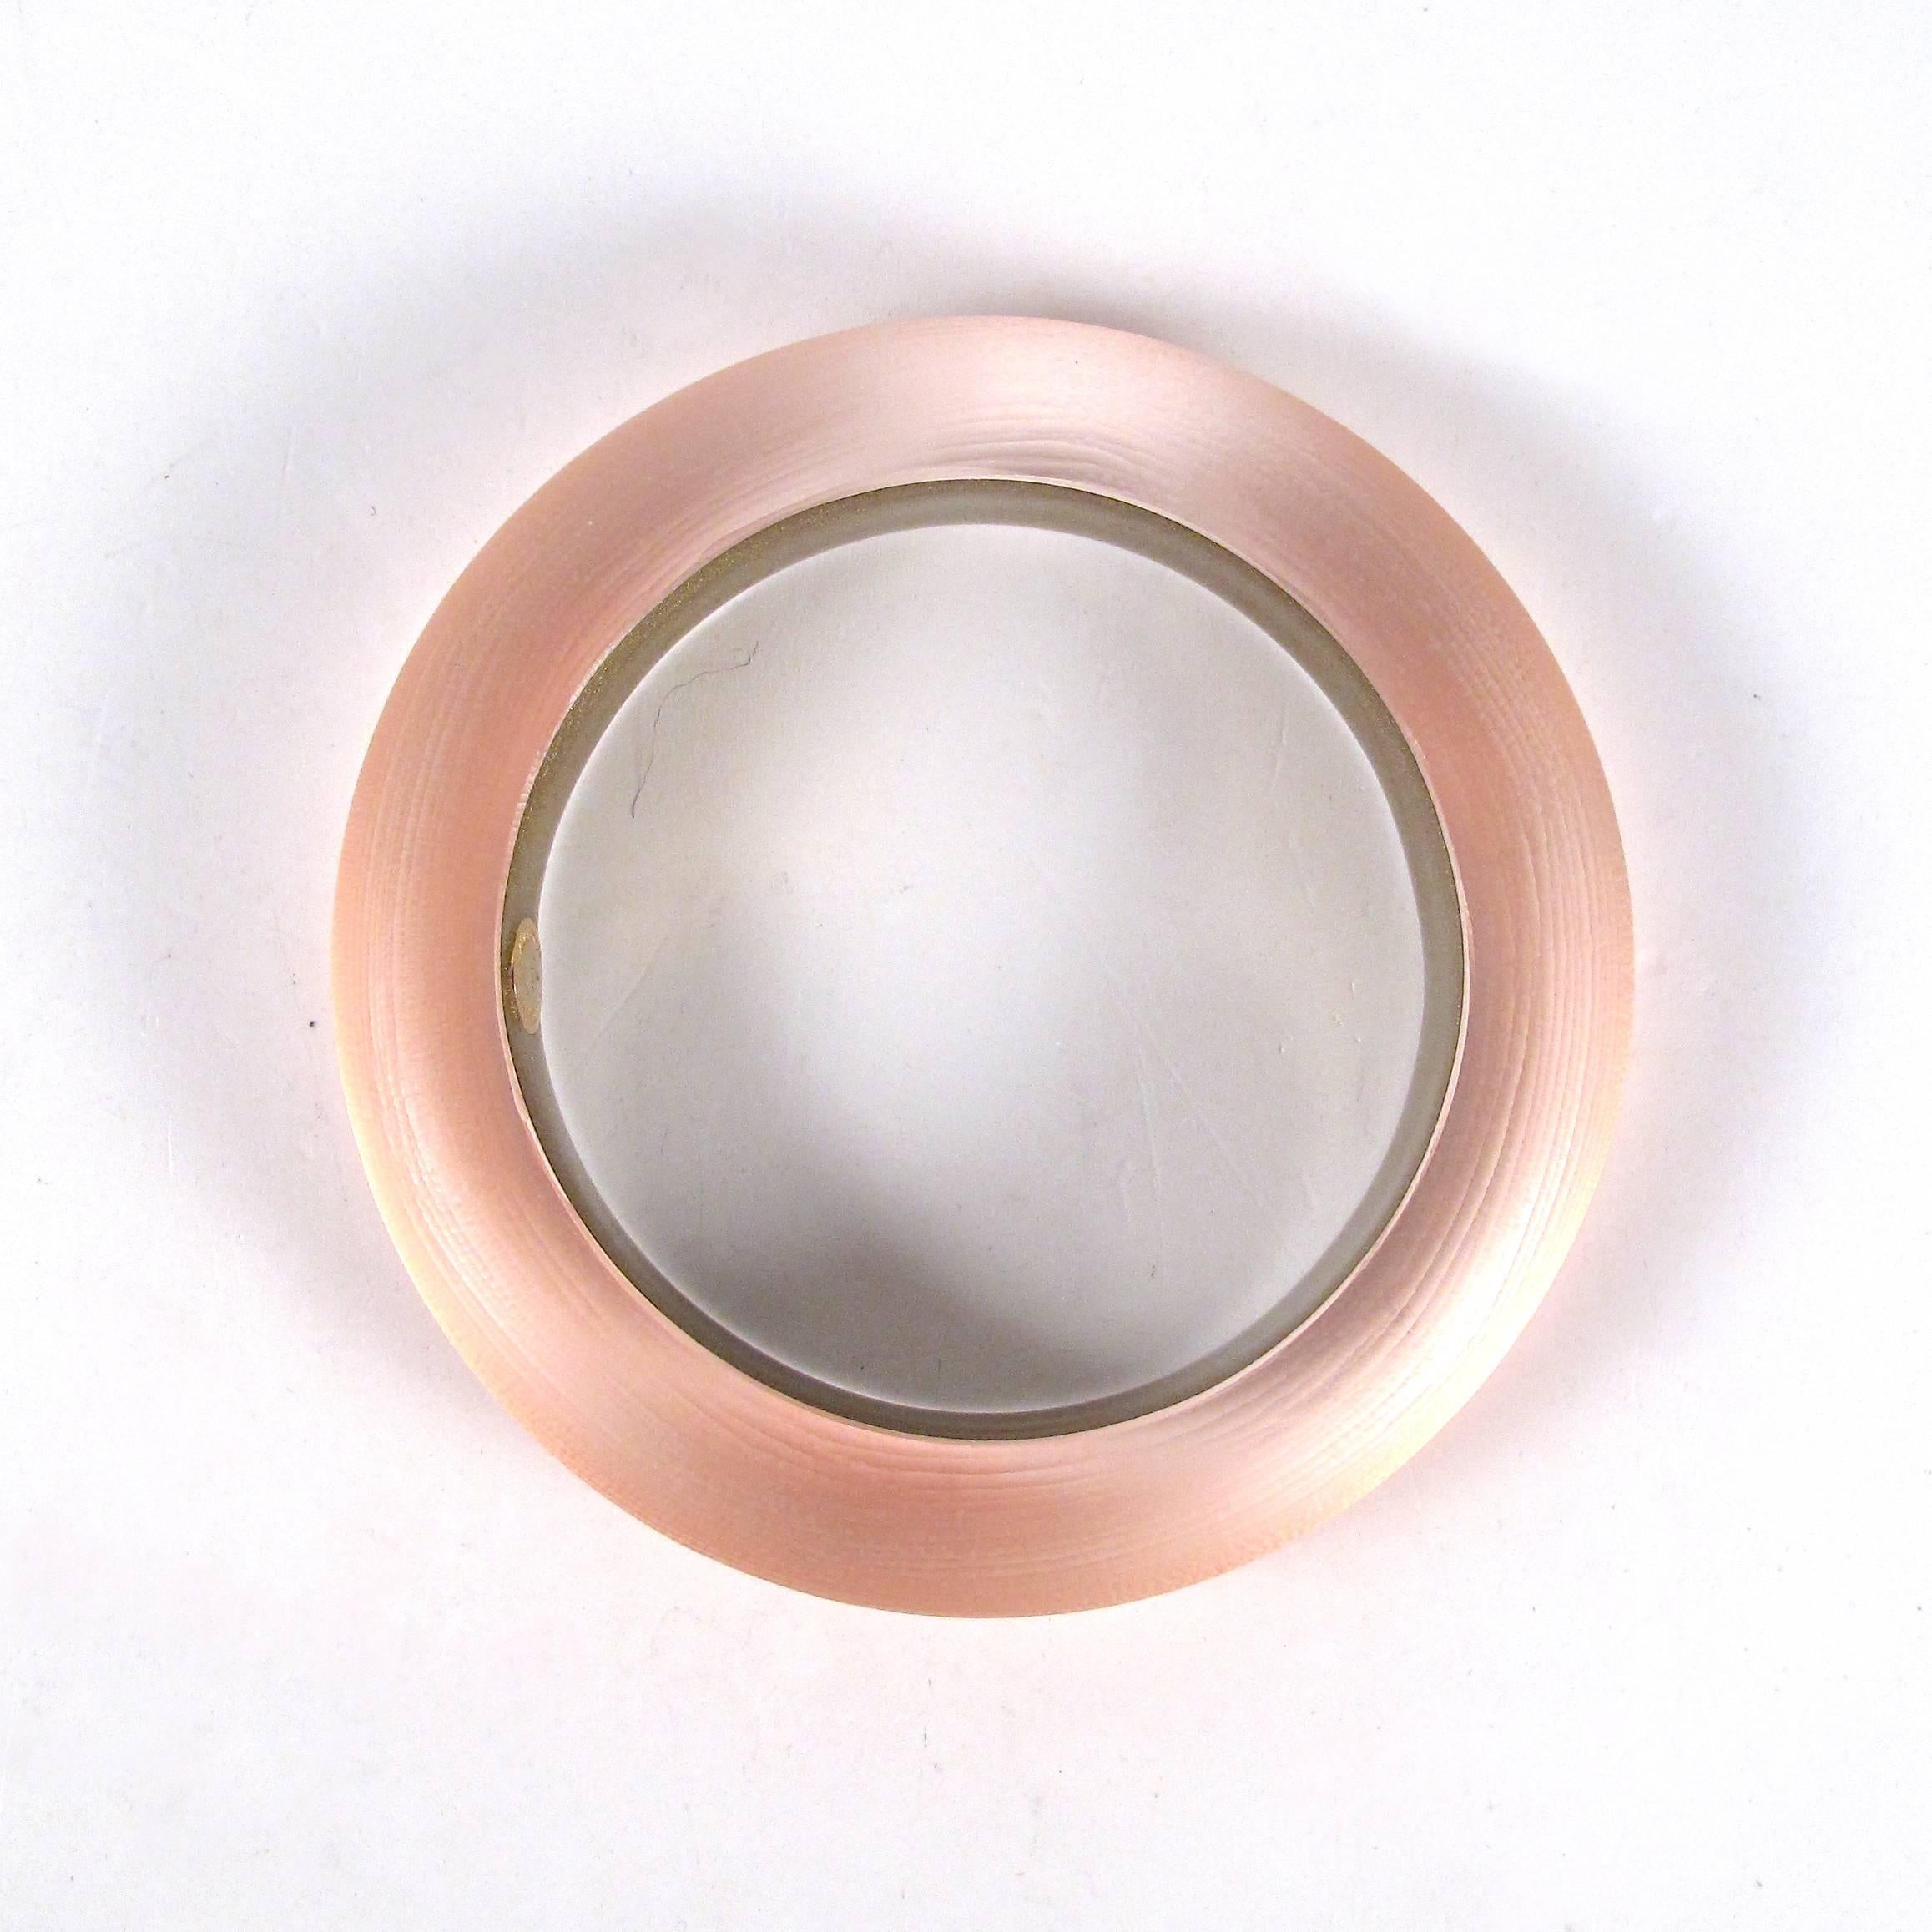 Alexis Bittar - Thin Bangle Bracelet

Color: Pink

Material: Resin 

------------------------------------------------------------

Details:

- gold tone hardware

- stamped 